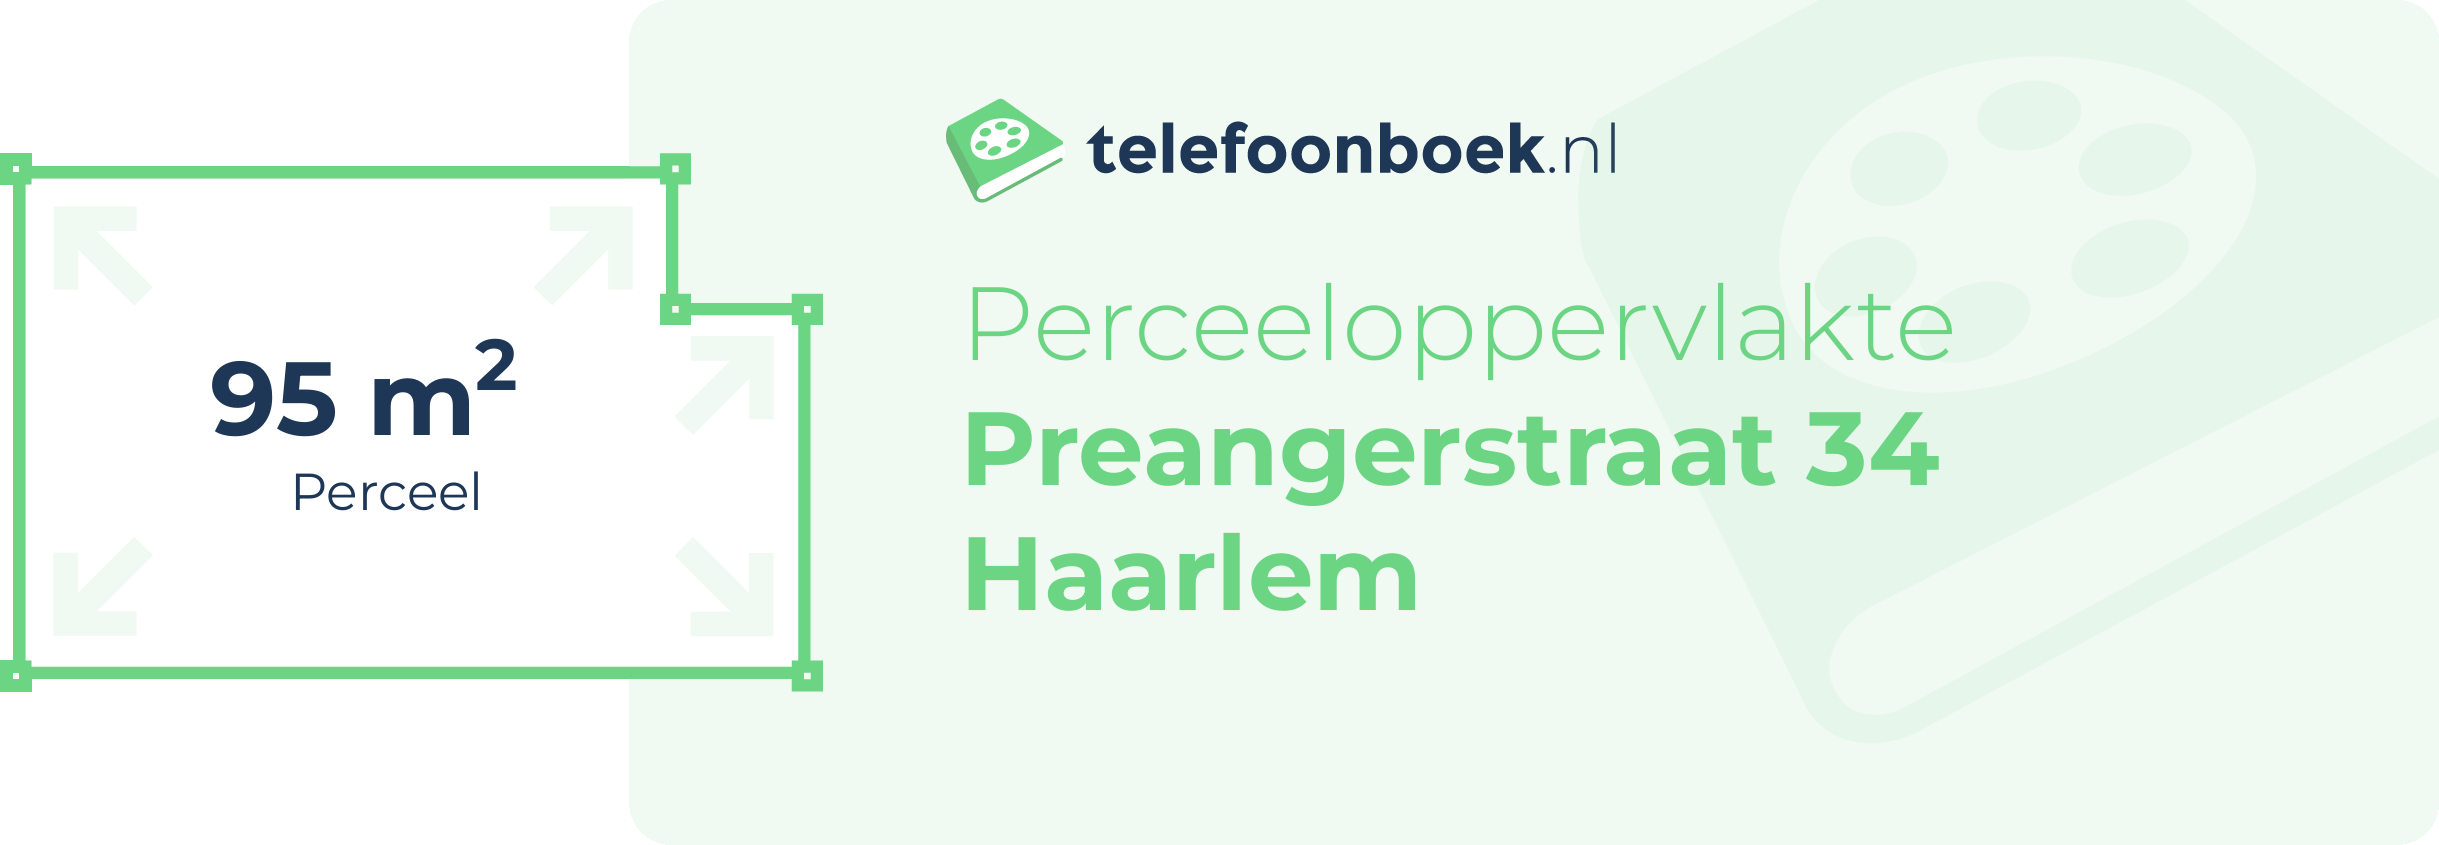 Perceeloppervlakte Preangerstraat 34 Haarlem